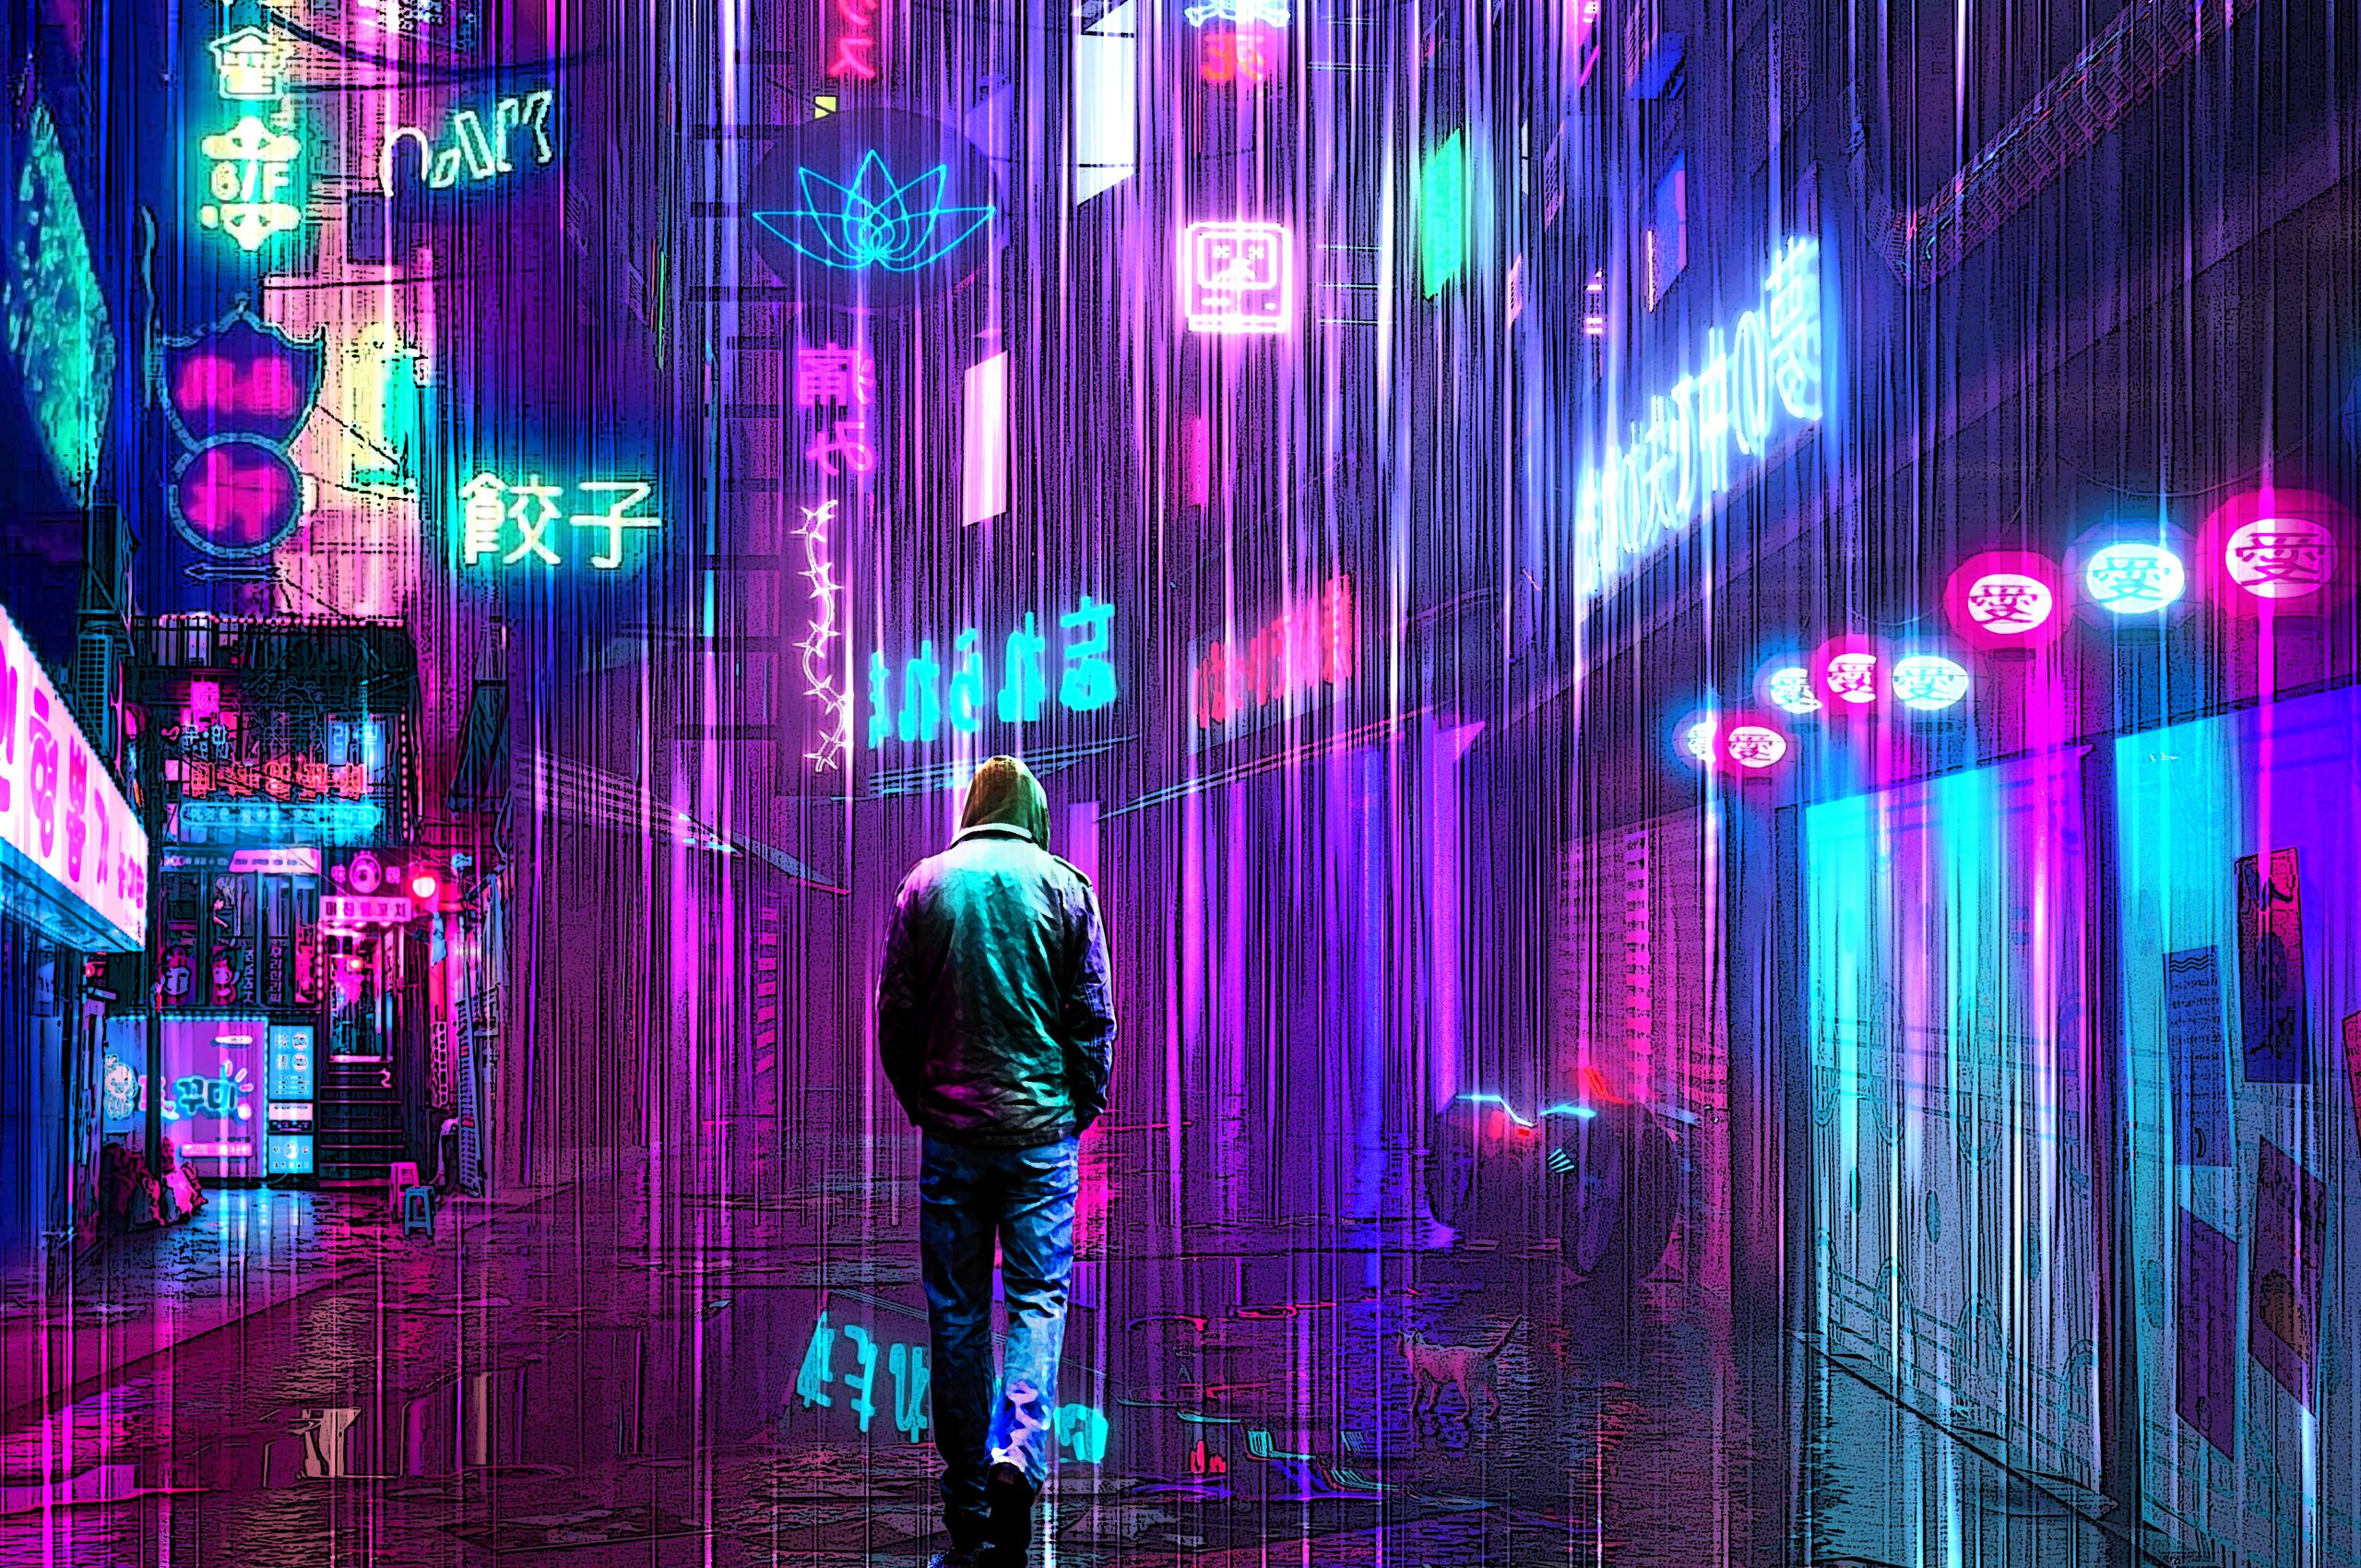 Neon Rainy Lights Cyberpunk 5k Chromebook Pixel HD 4k Wallpaper, Image, Background, Photo and Picture